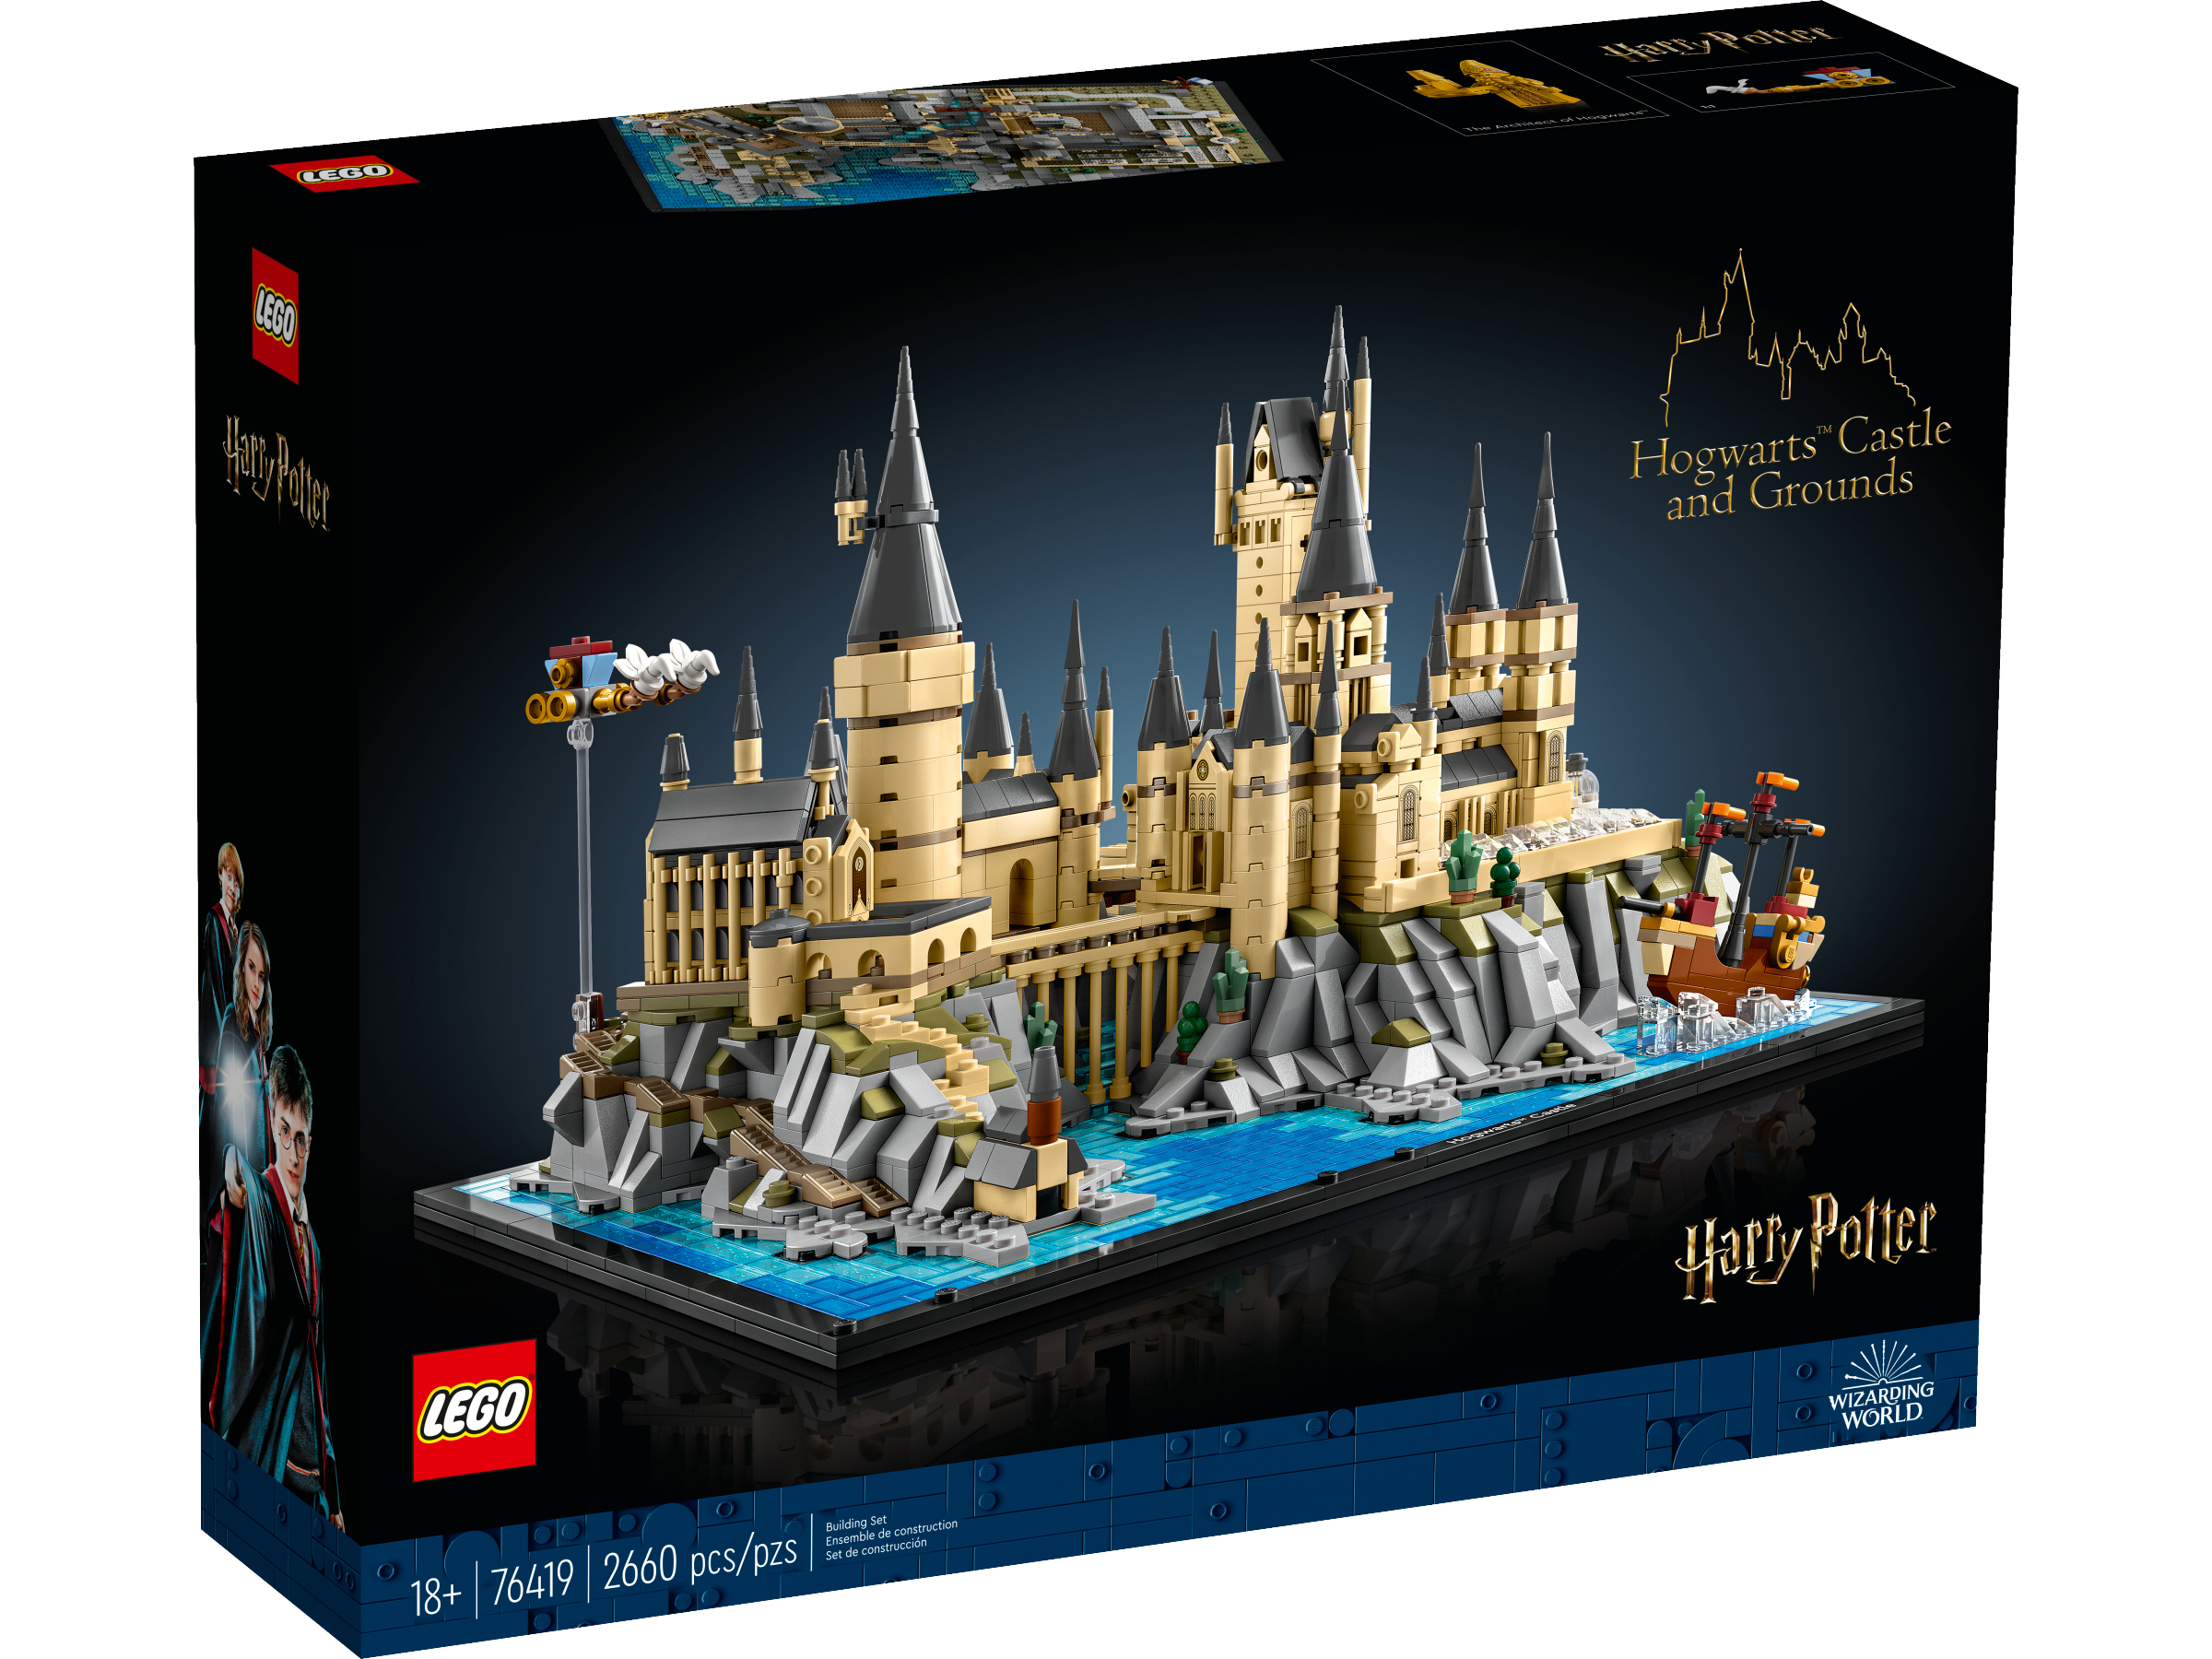 Lego announces Hogwarts Castle set - Hogwarts Legacy - Gamereactor